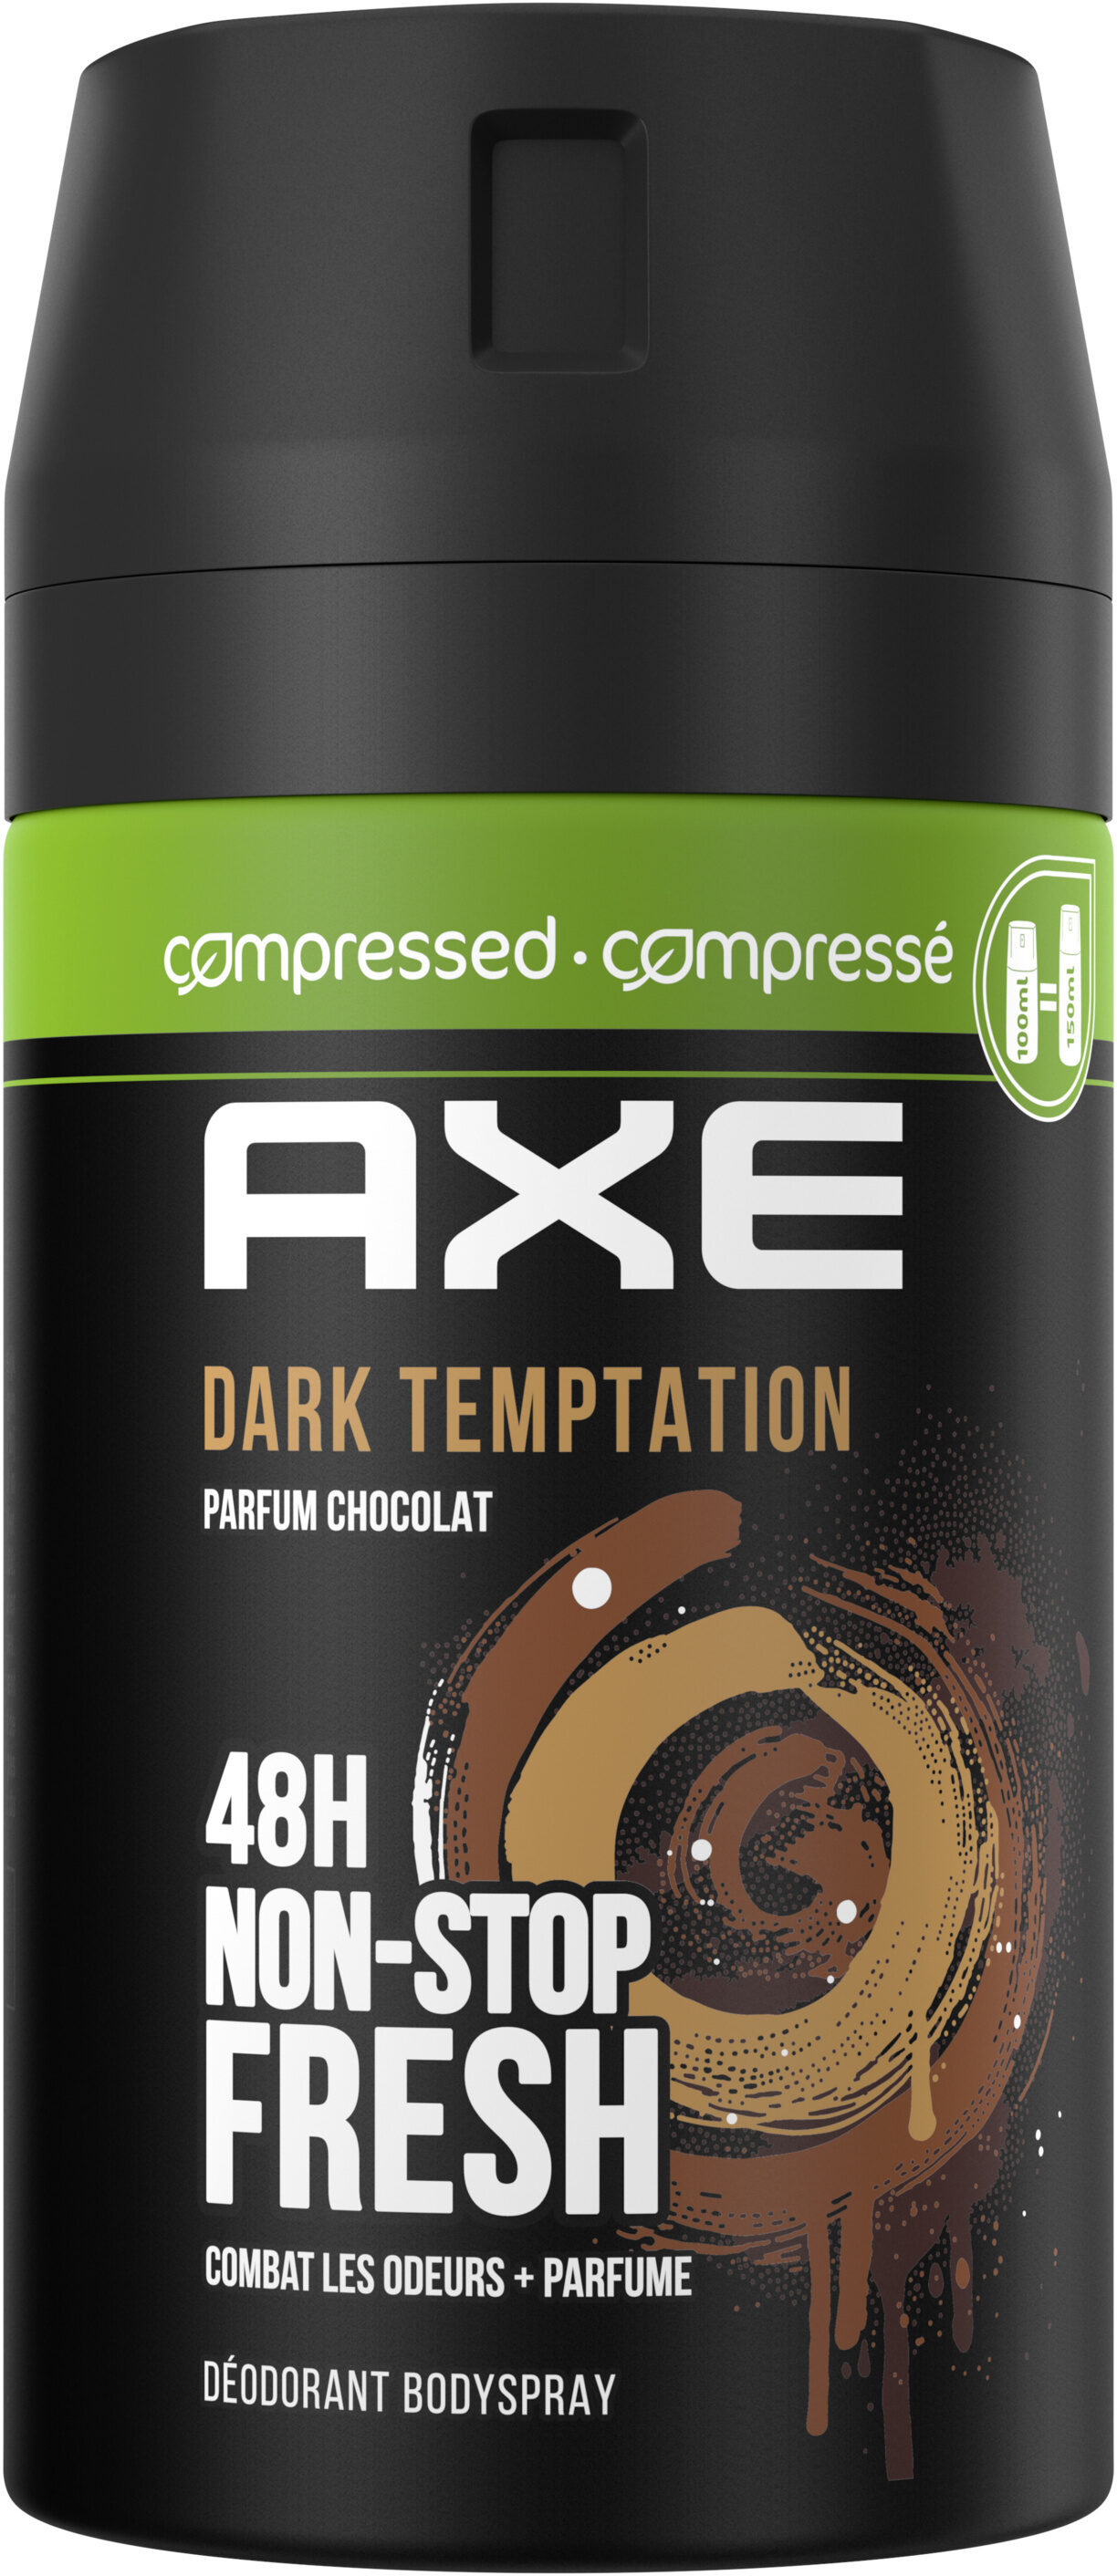 Axe bs dark temp 100ml - Tuote - fr